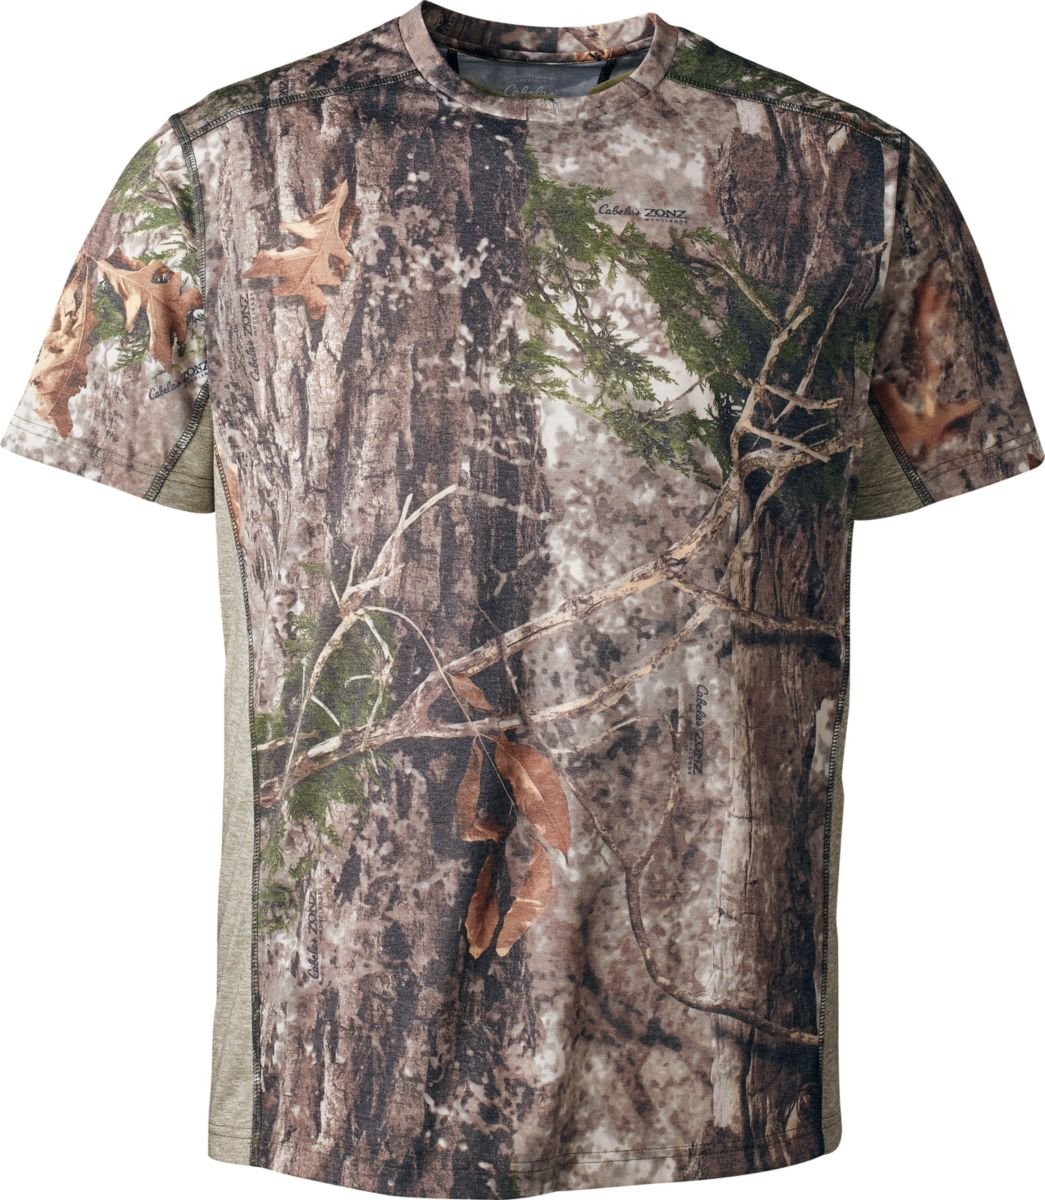 Cabela's Men's Camo Granite Range Active Short-Sleeve Shirt - $8.88 (Free 2-Day Shipping over $50)